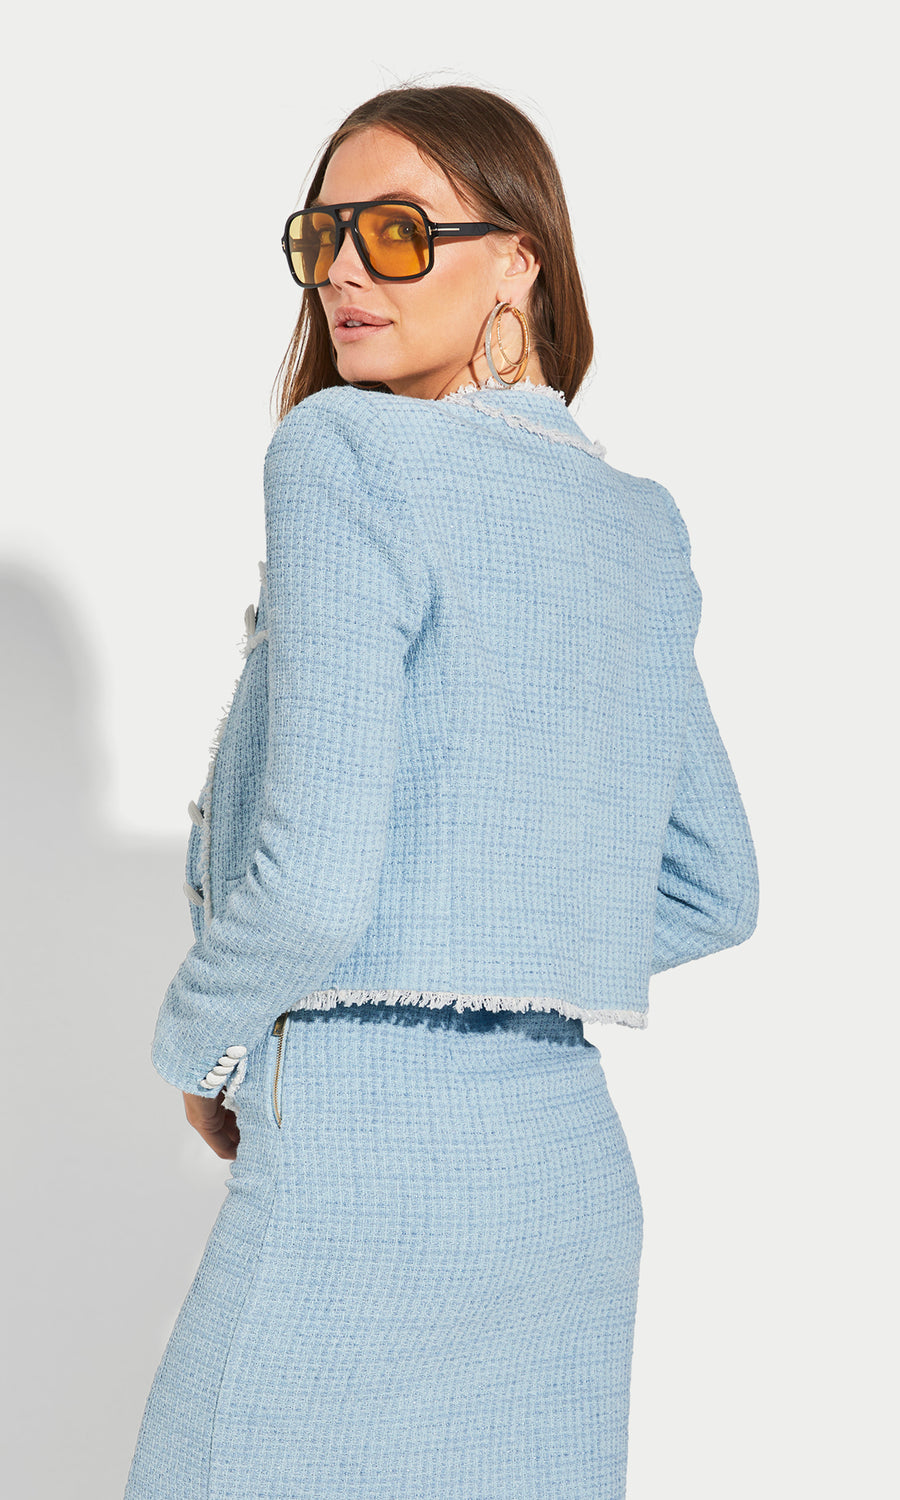 Killian Tweed Jacket - French Blue/Cream